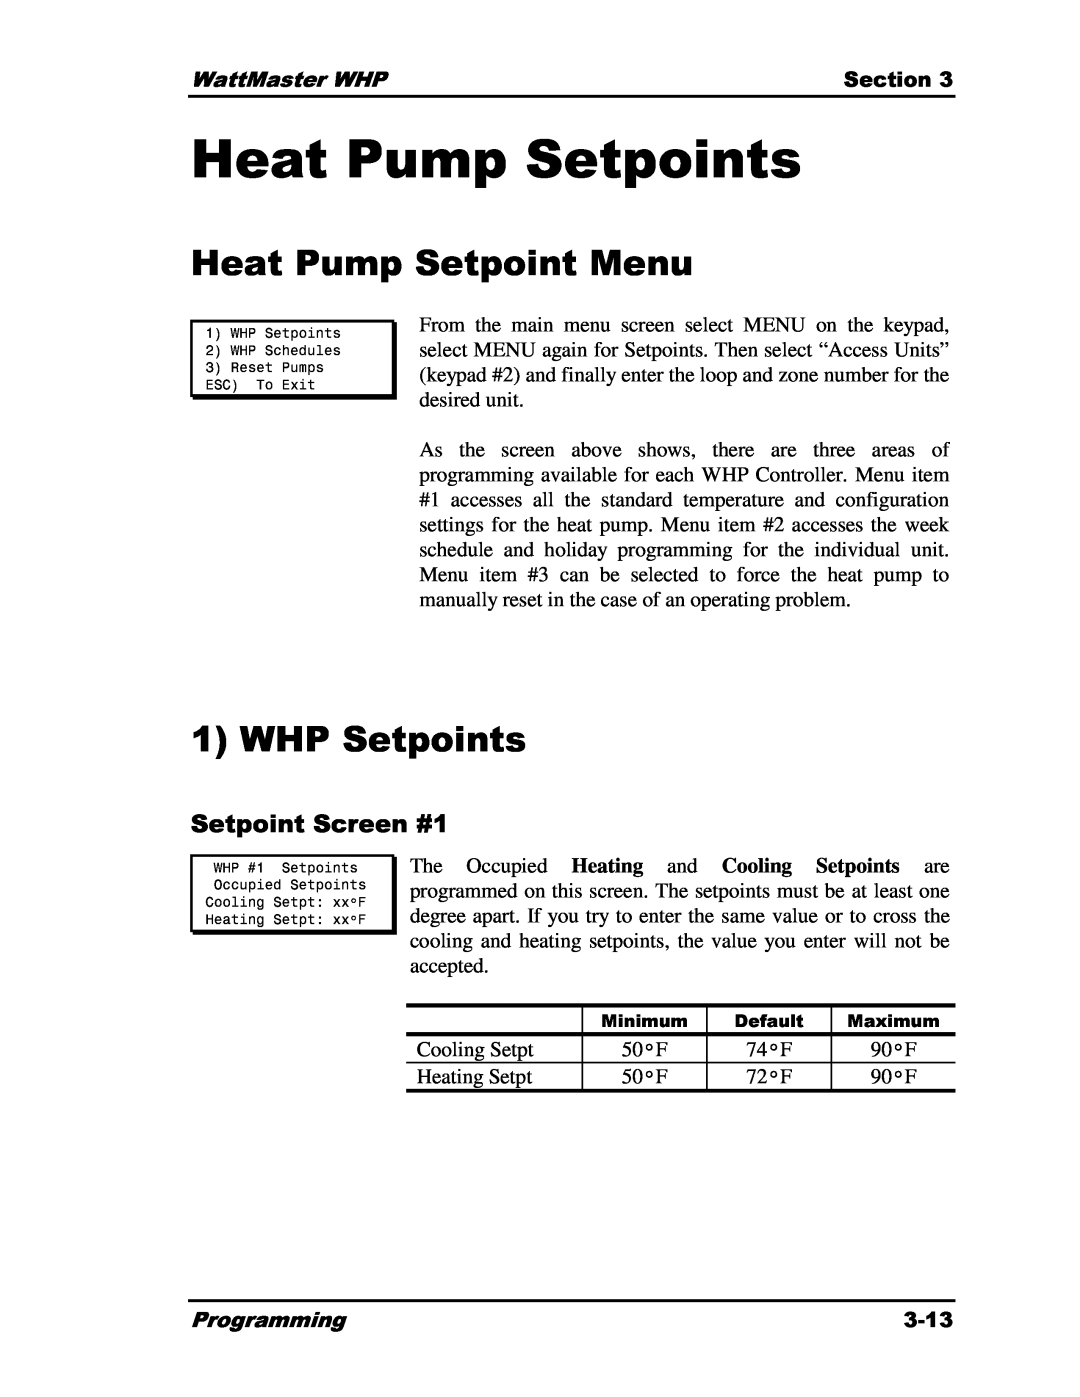 Heat Controller Water Source Heat Pump Heat Pump Setpoints, Heat Pump Setpoint Menu, WHP Setpoints, DefaultMaximum74F 90F 